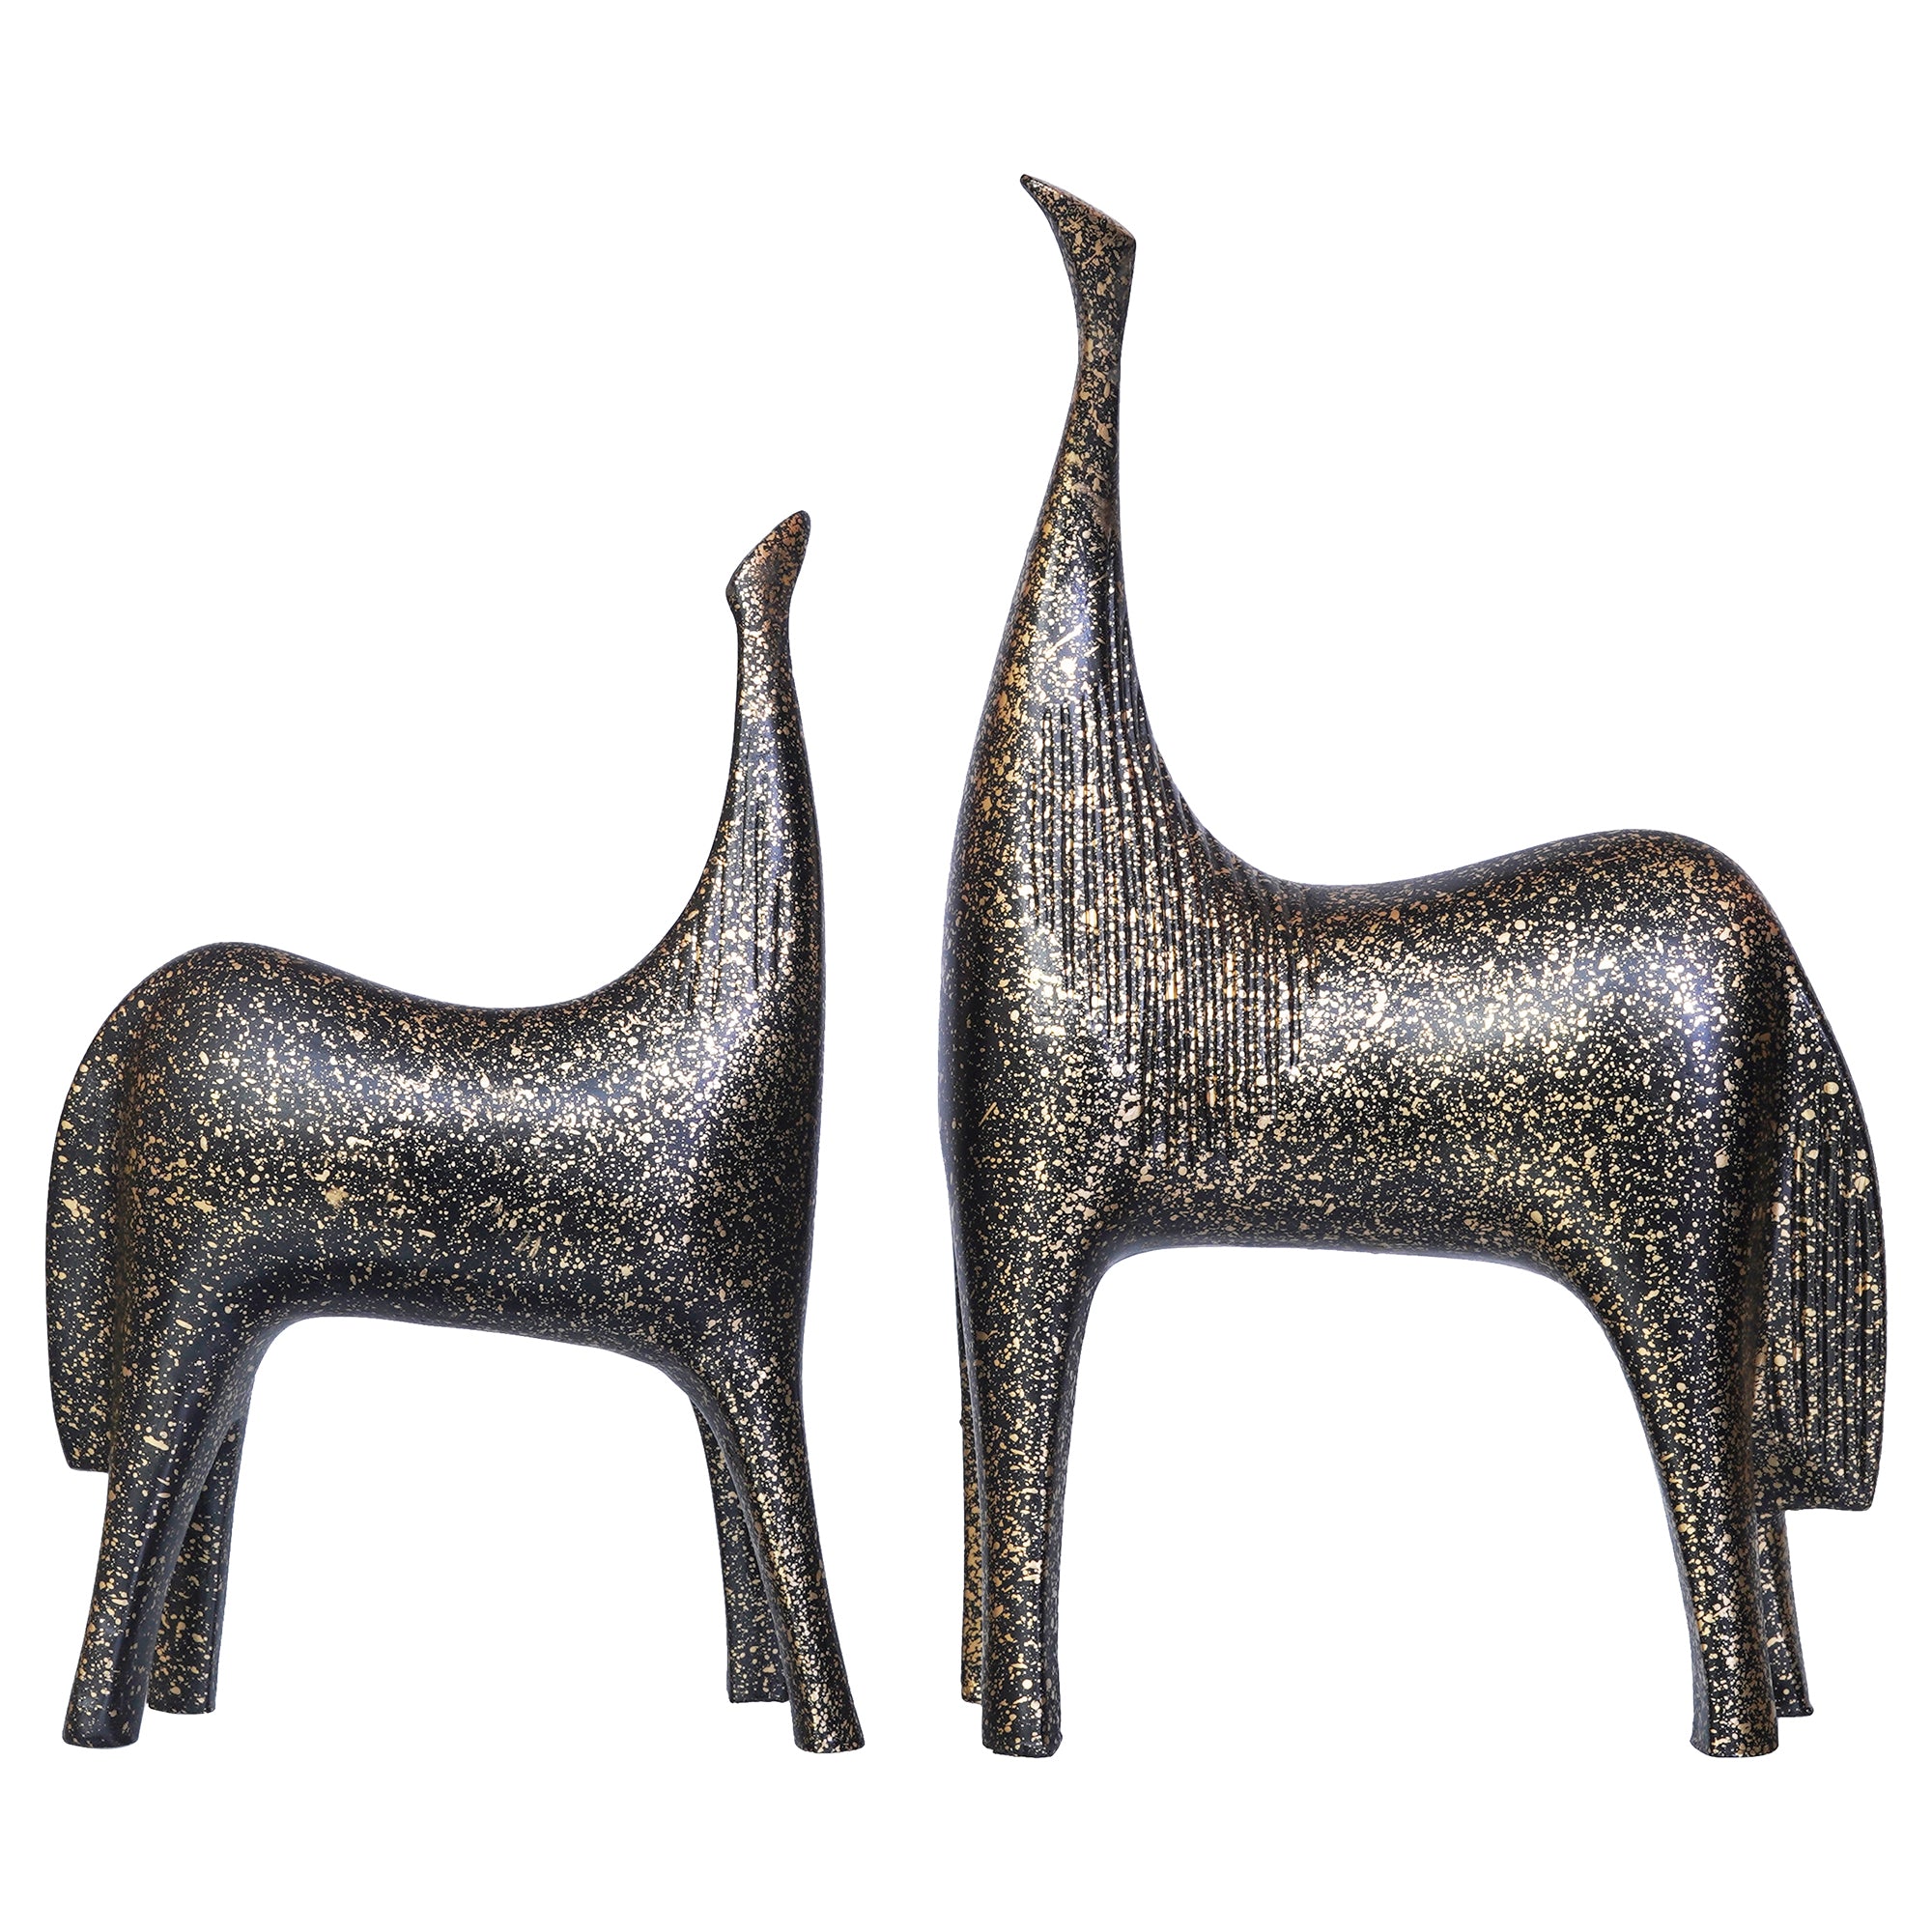 Set of 2 Black & Golden Horse Statues Decorative Animal Figurines 2